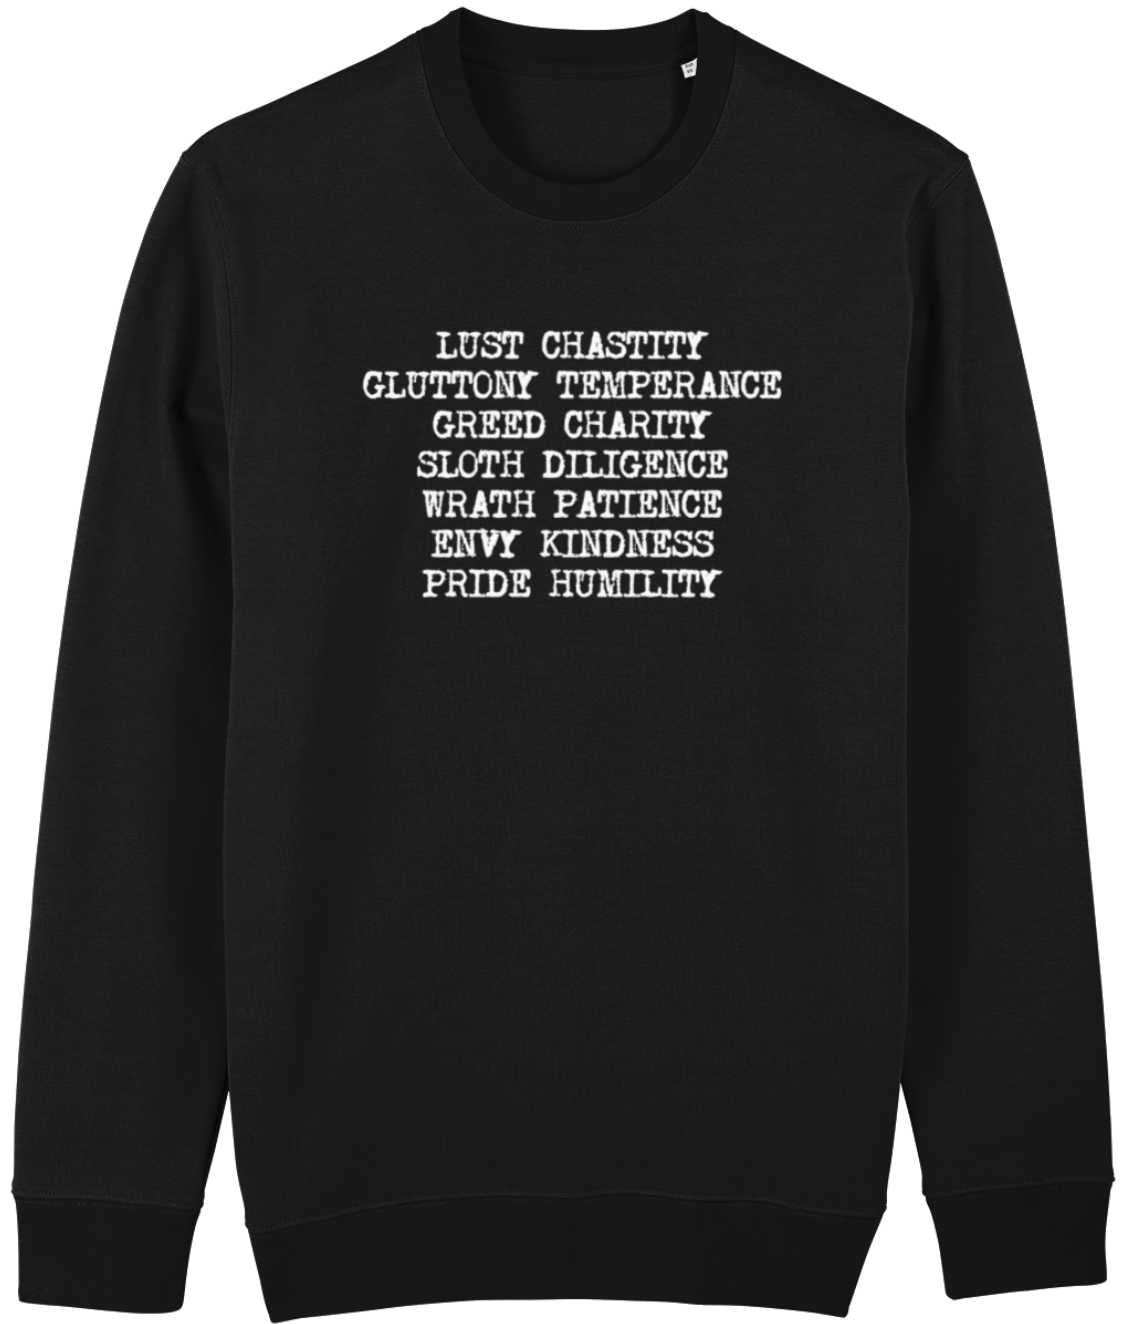 Saints & Sinners non gender sweatshirt Cherchez La Femme brand